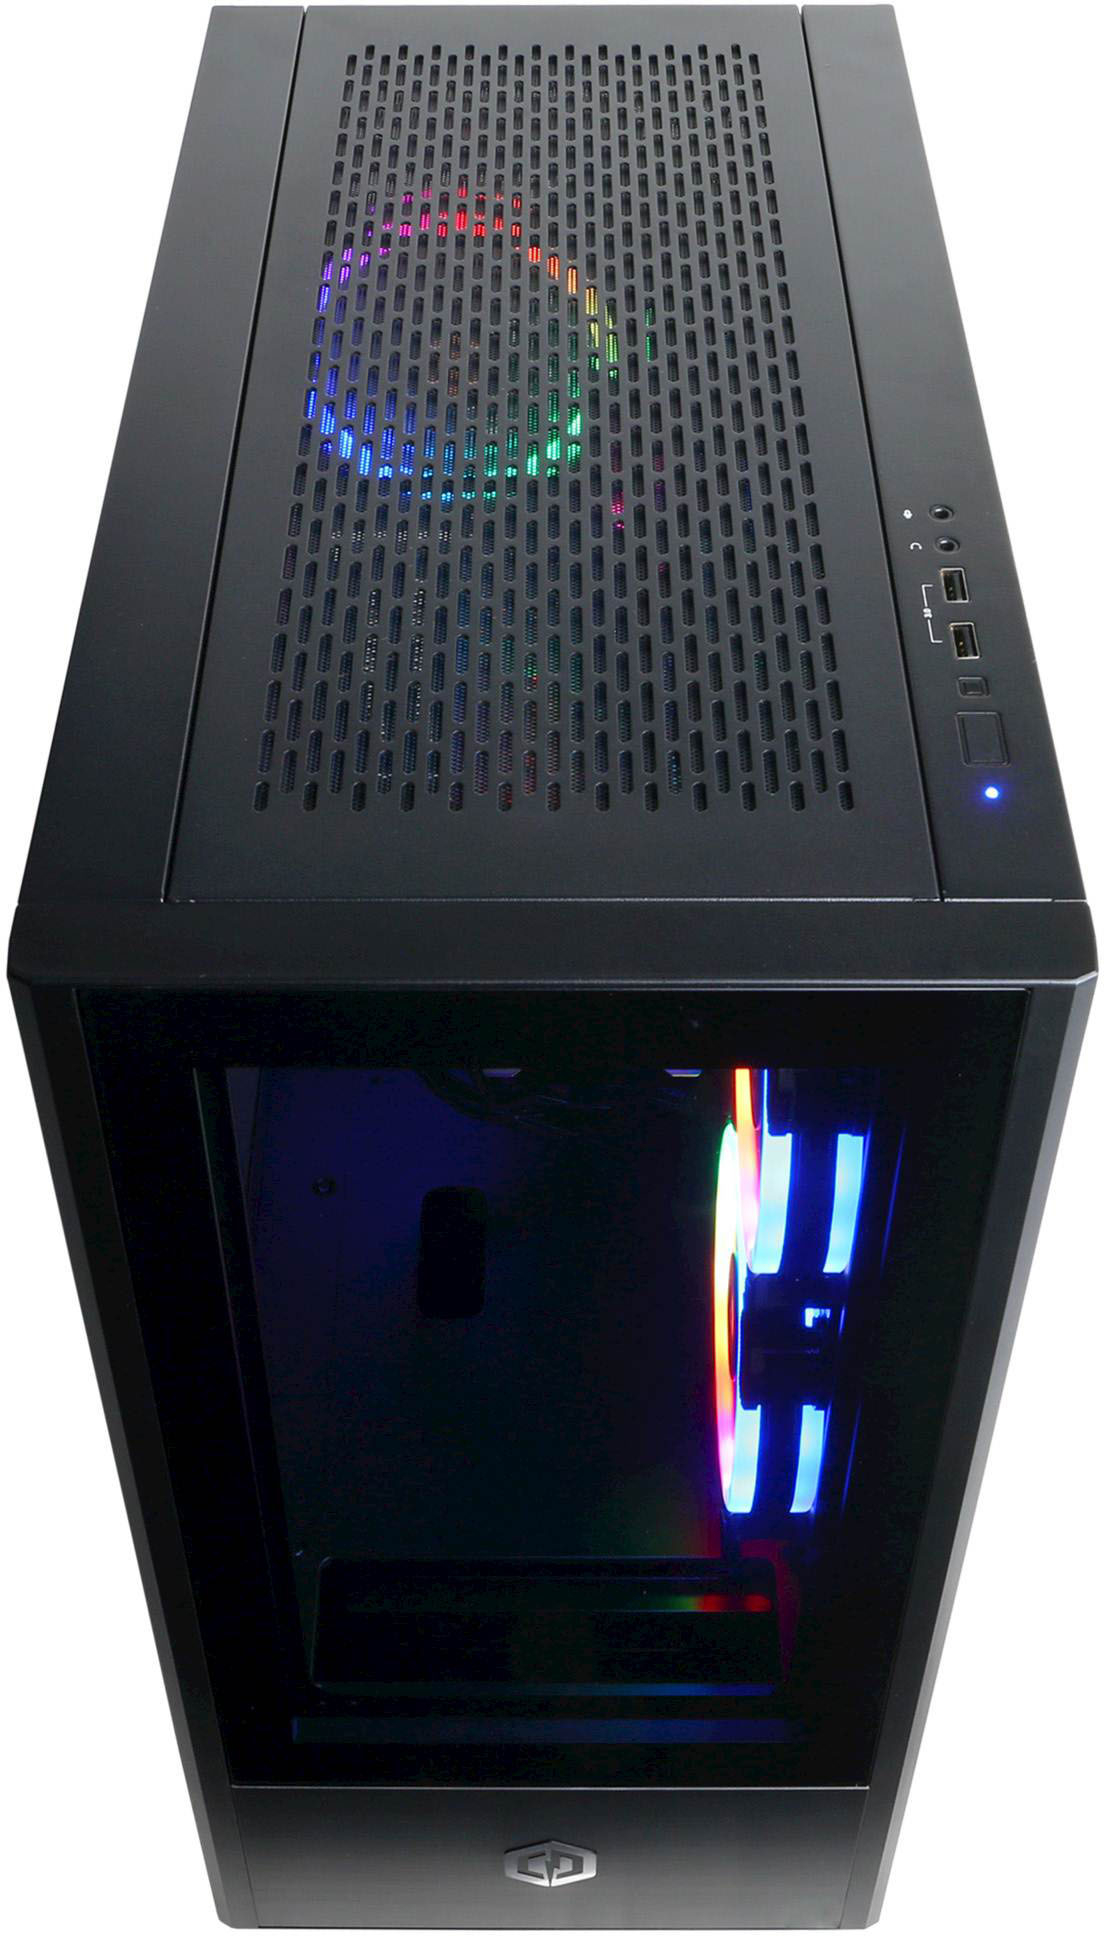 CYBERPOWERPC GXI11140CV12 Gamer Xtreme Gaming Desktop - Intel i5